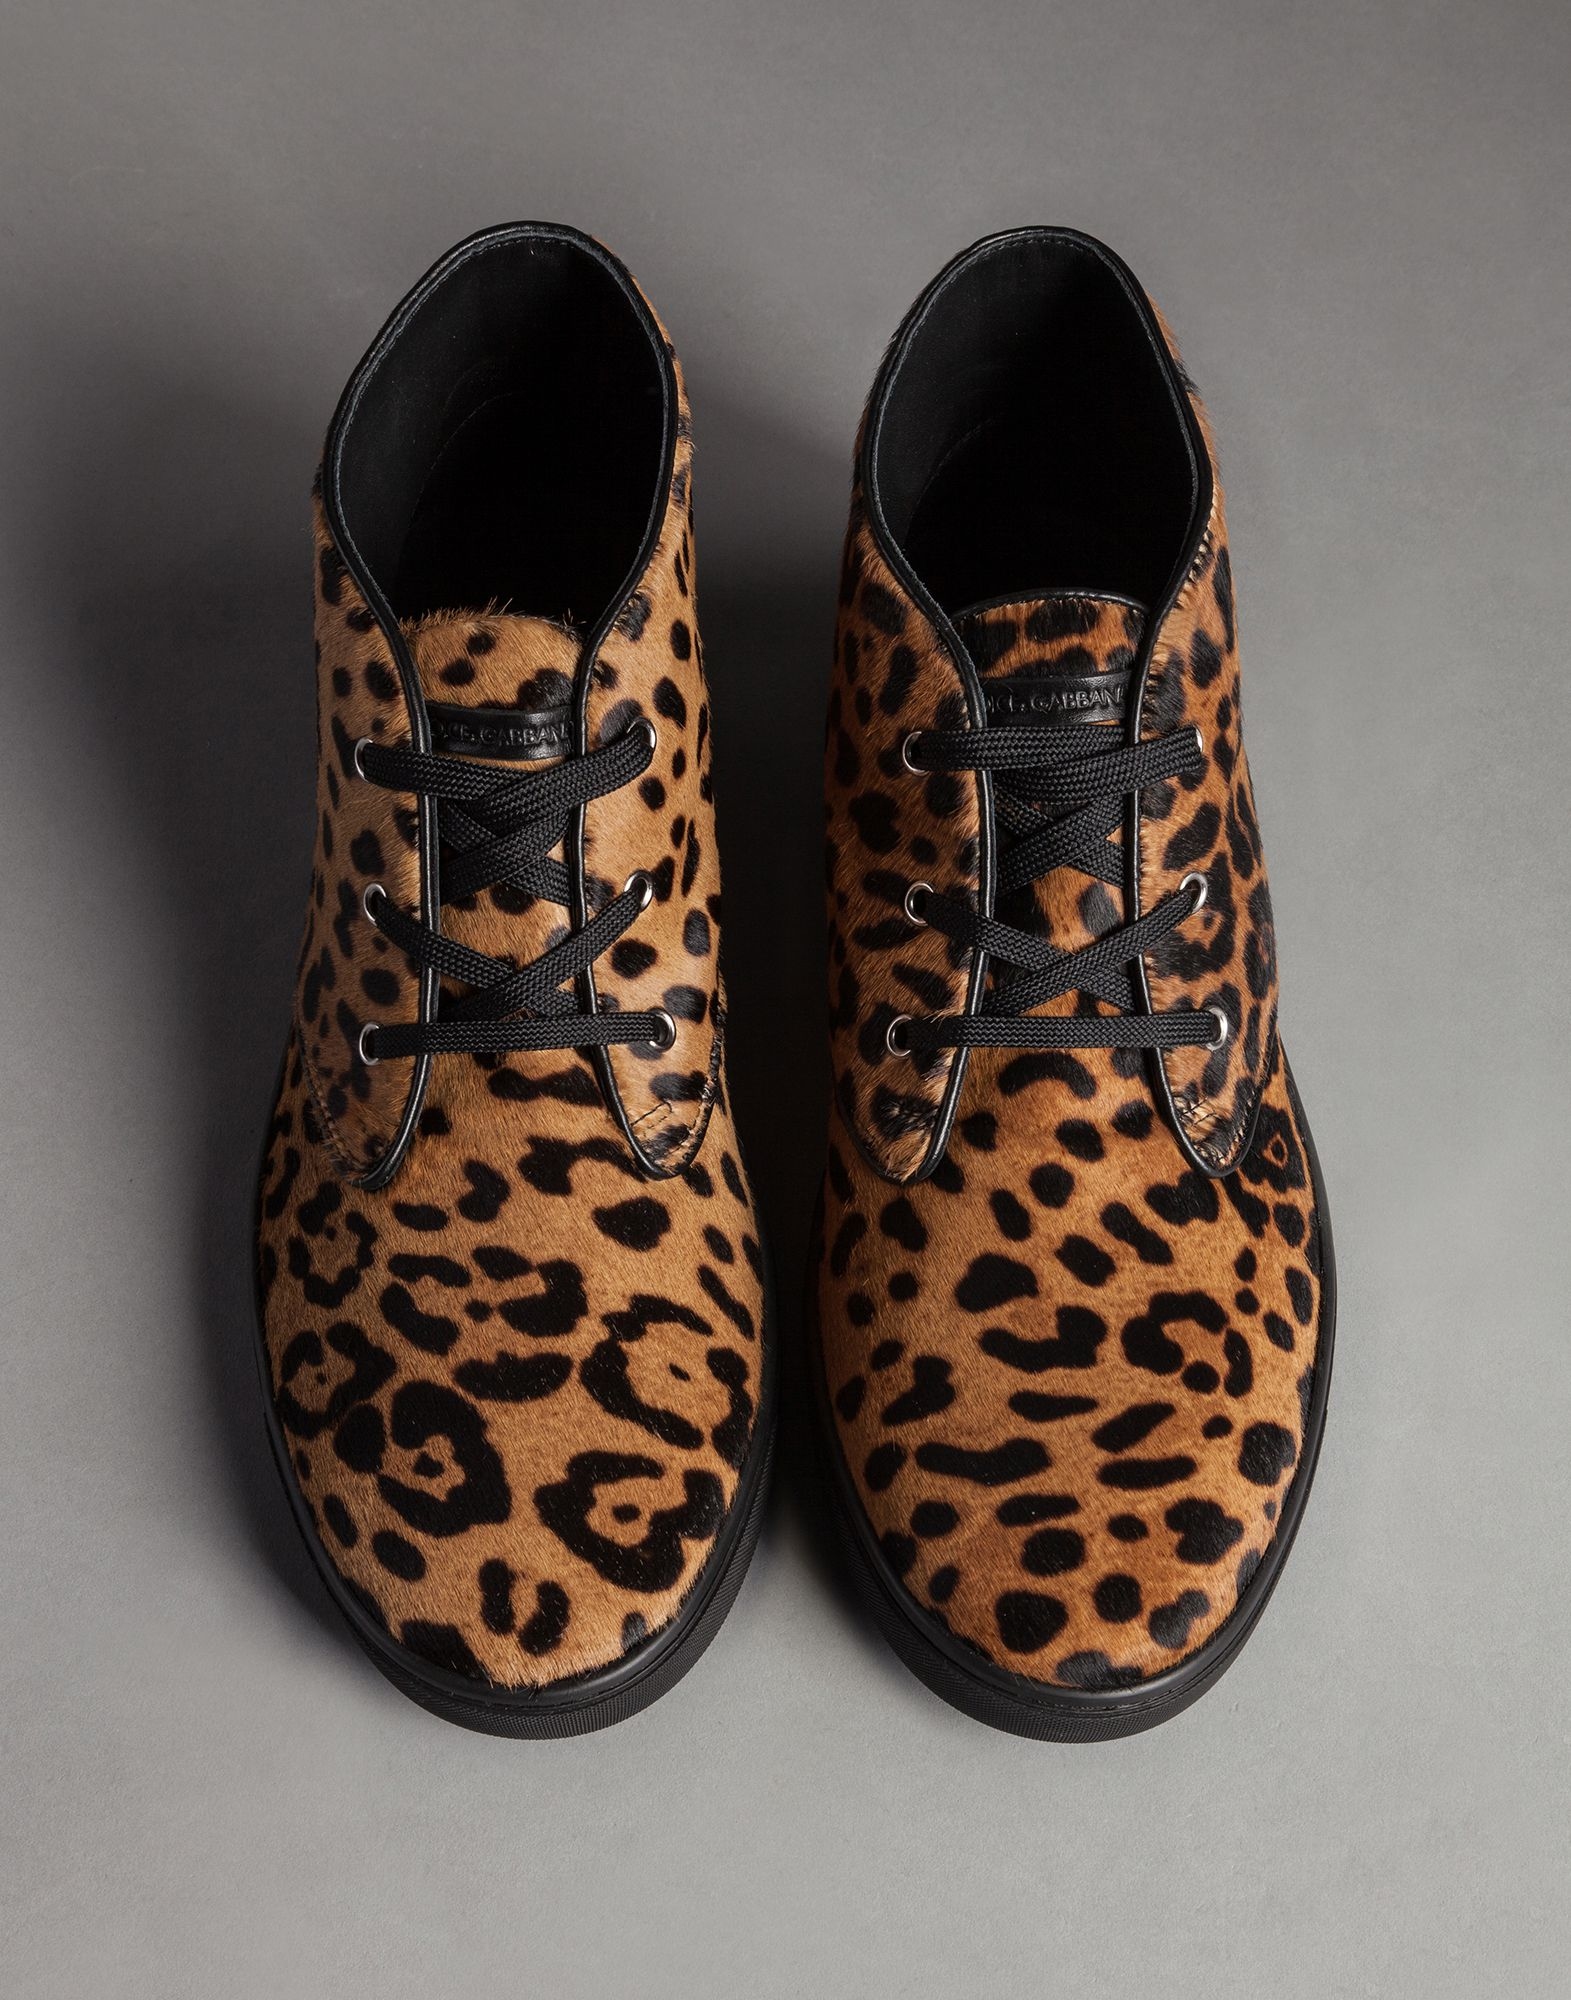 Dolce & Gabbana Natural Leopard Print Pony Desert Boots for Men - Lyst